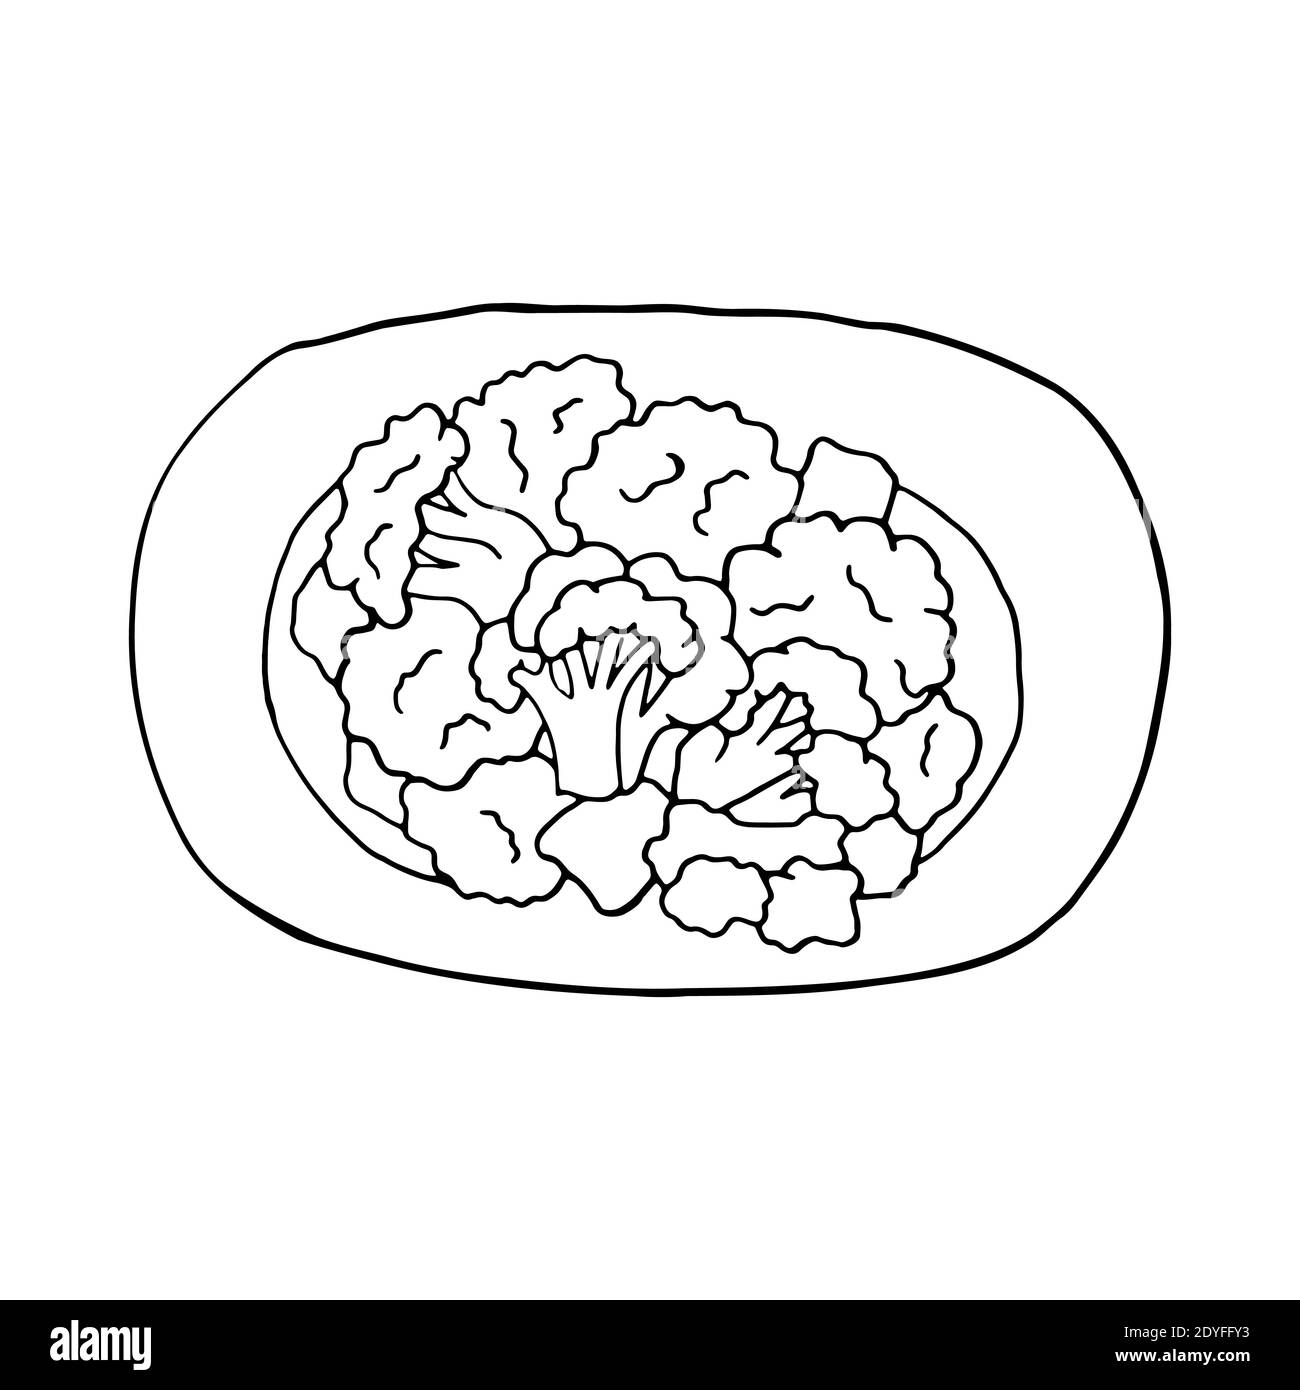 Vector hand drawn doodle aloo gobi. Indian cuisine dish. Design sketch element for menu cafe, restaurant, label and packaging. Illustration on a white Stock Vector